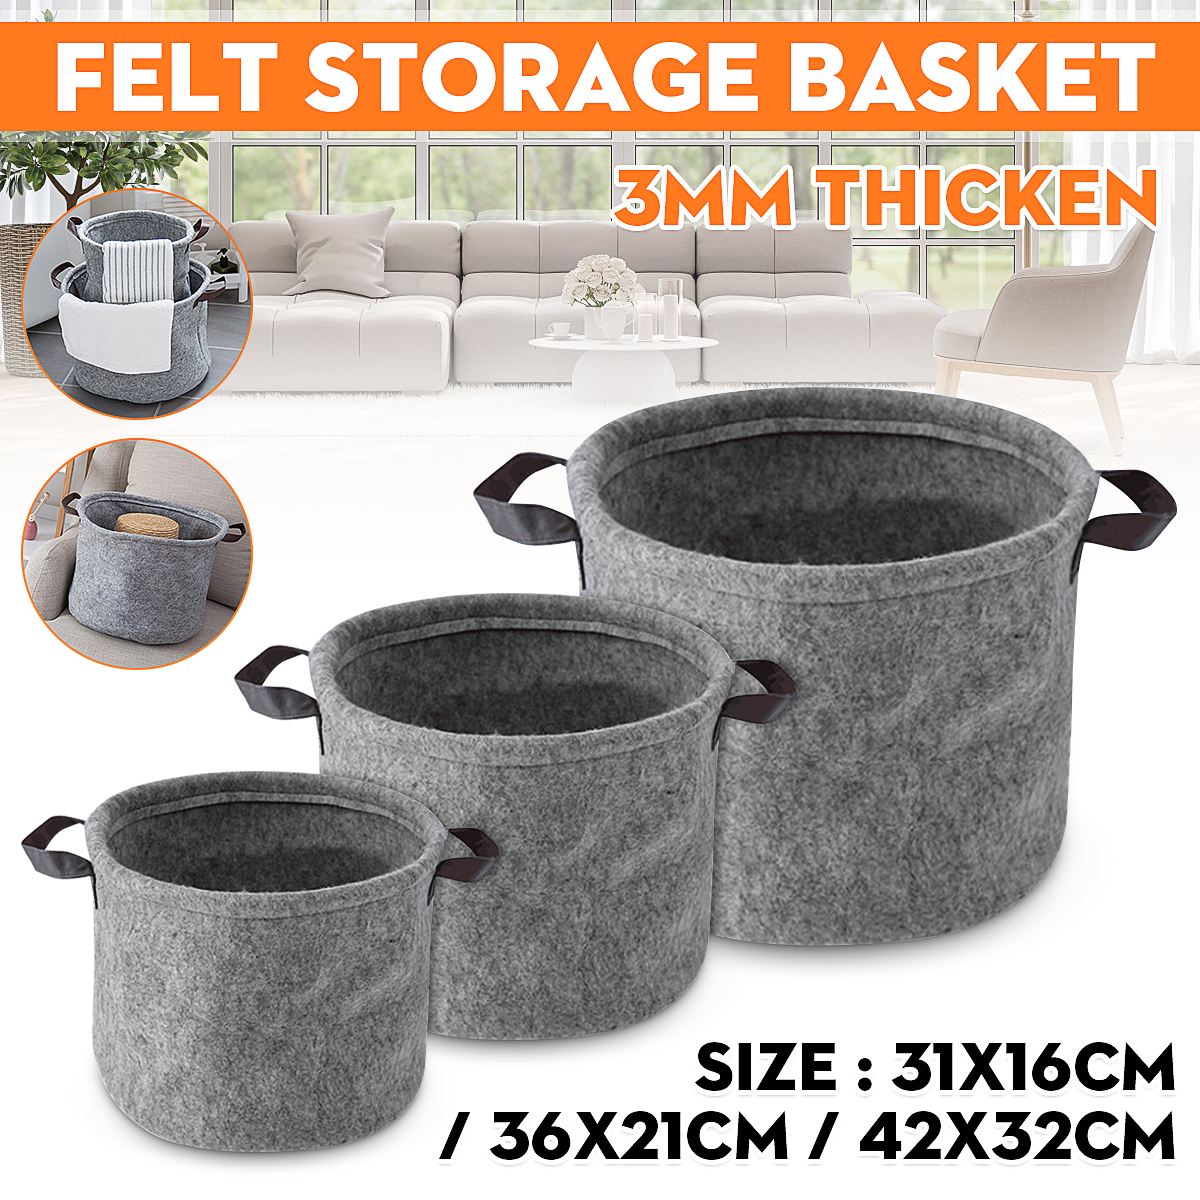 Foldable-Felt-Storage-Laundry-Hamper-Clothes-Basket-Bin-Toy-Hamper-with-Handle-Felt-Storage-Basket-B-1841073-1